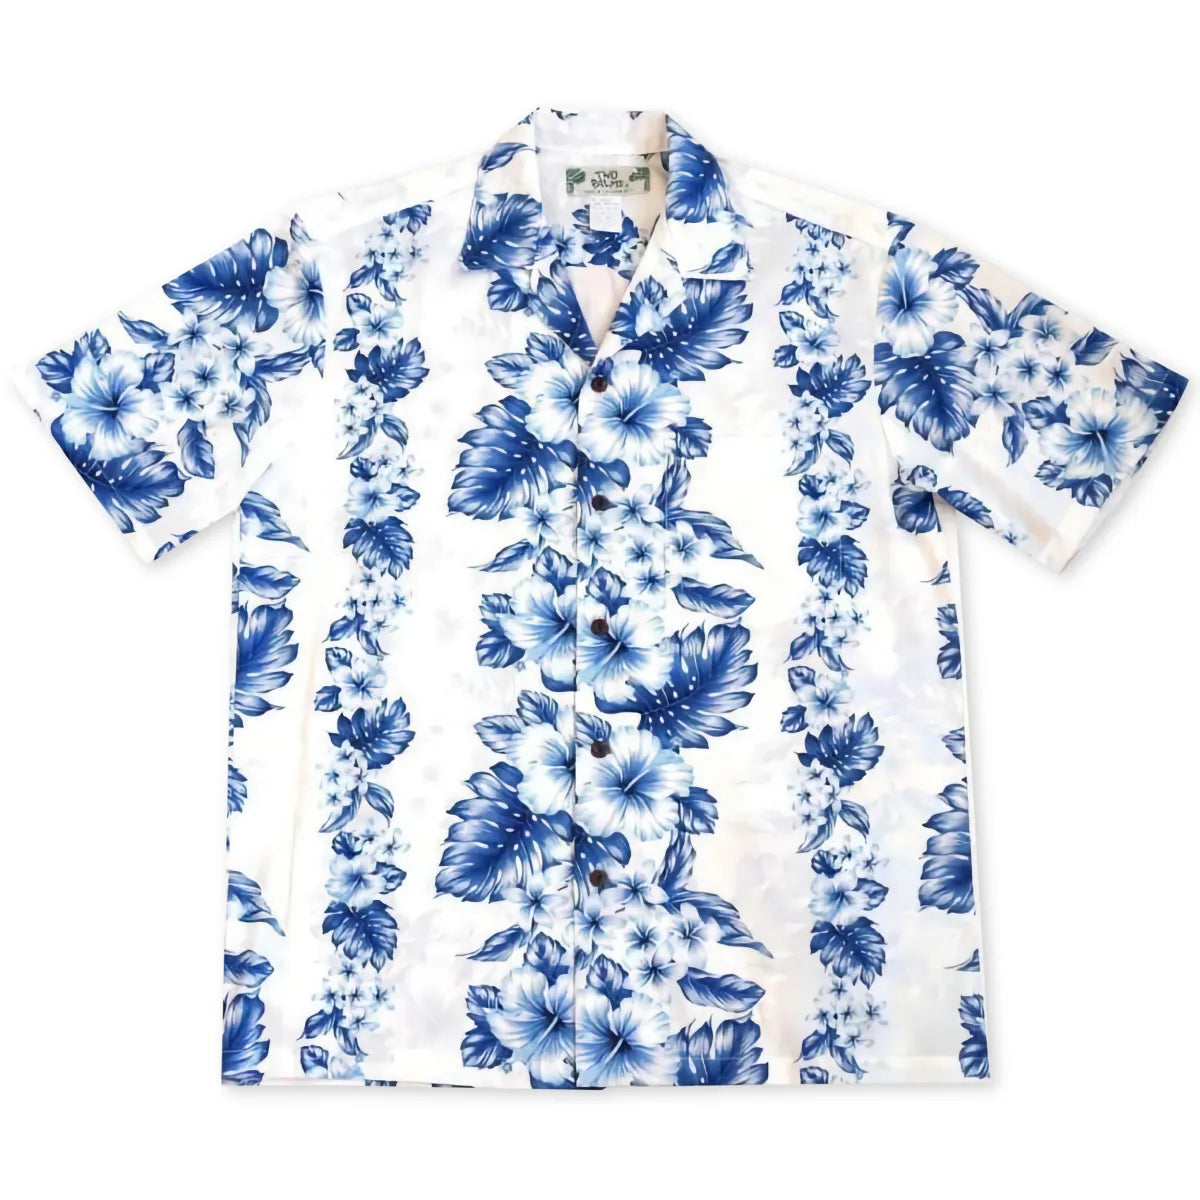 Hanalei white hawaiian cotton shirt